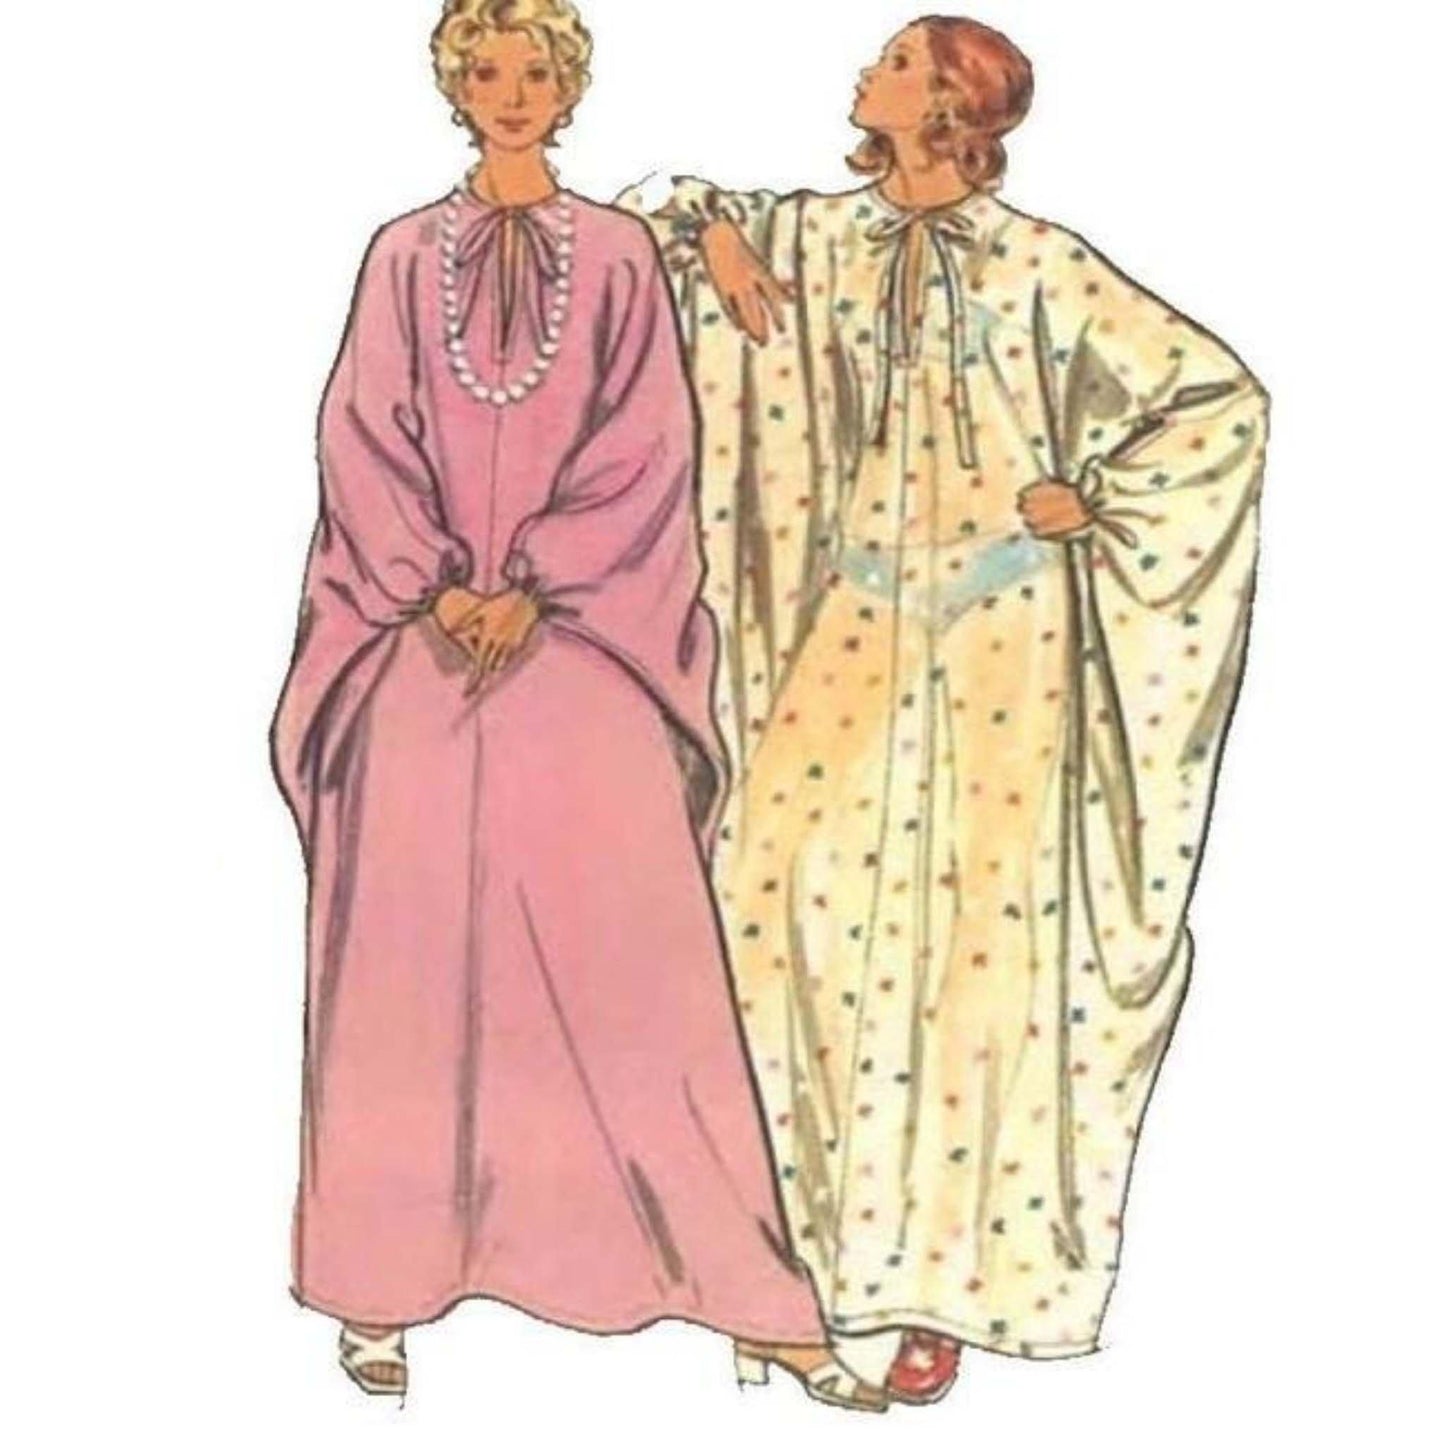 Two women wearing a Vintage 1970s Pattern, Kaftan / Kimono, Loose Fitting Dress